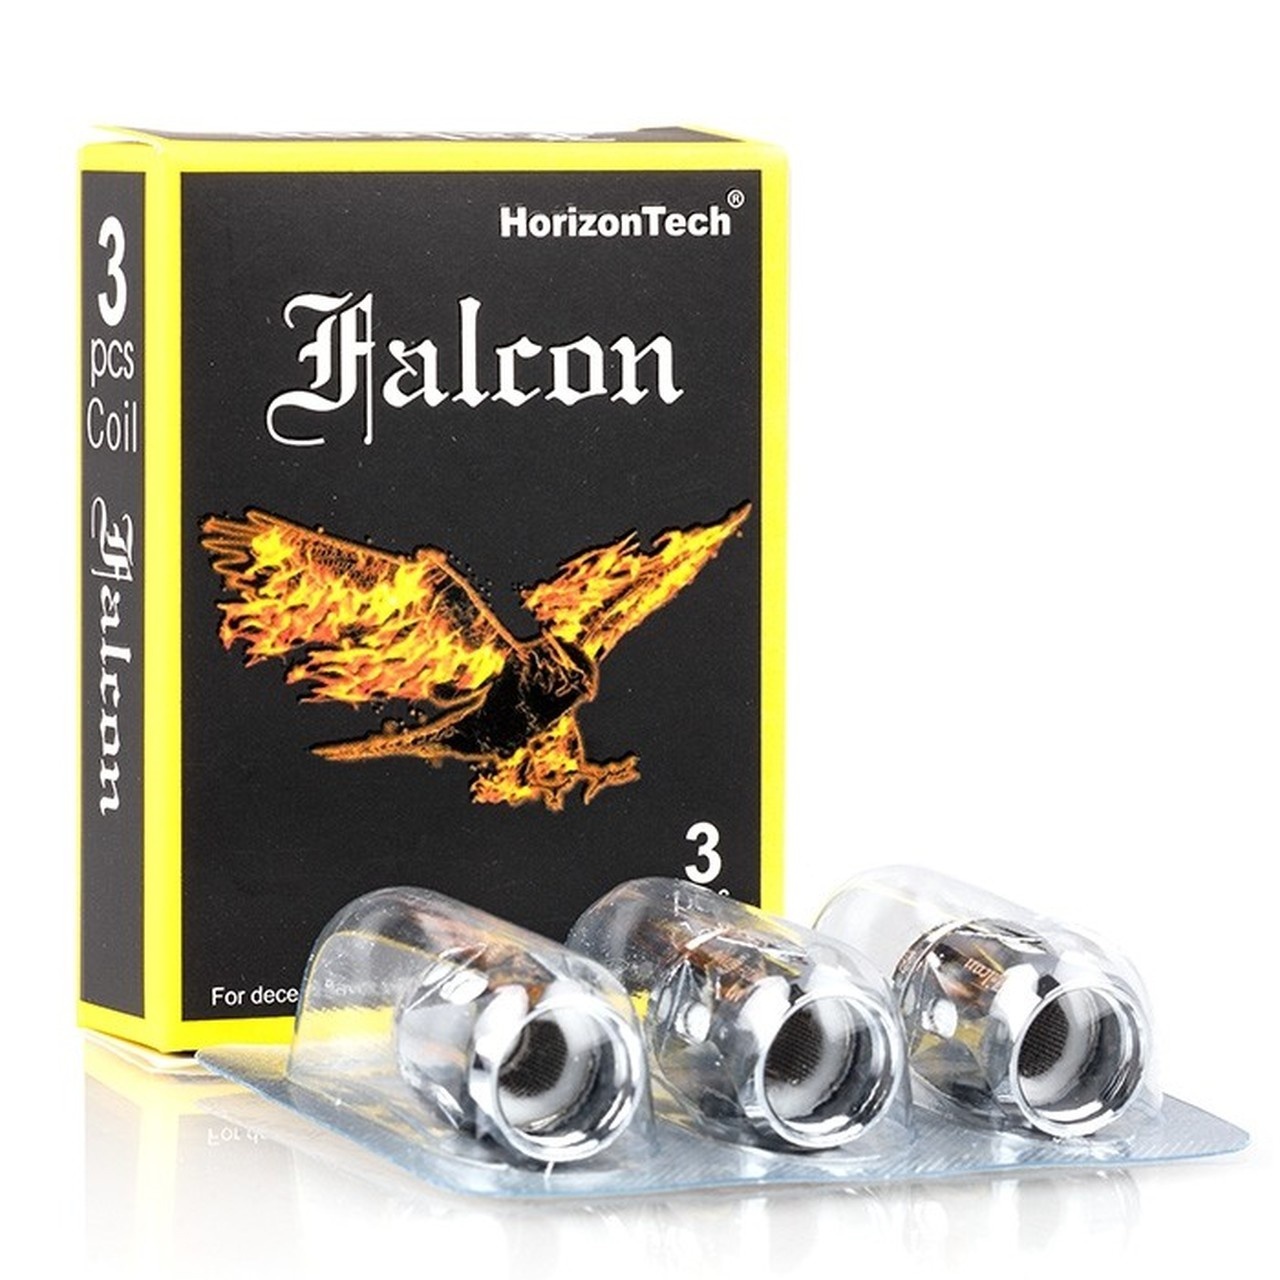 HorizonTech HorizonTech Falcon M-Dual Coil Box